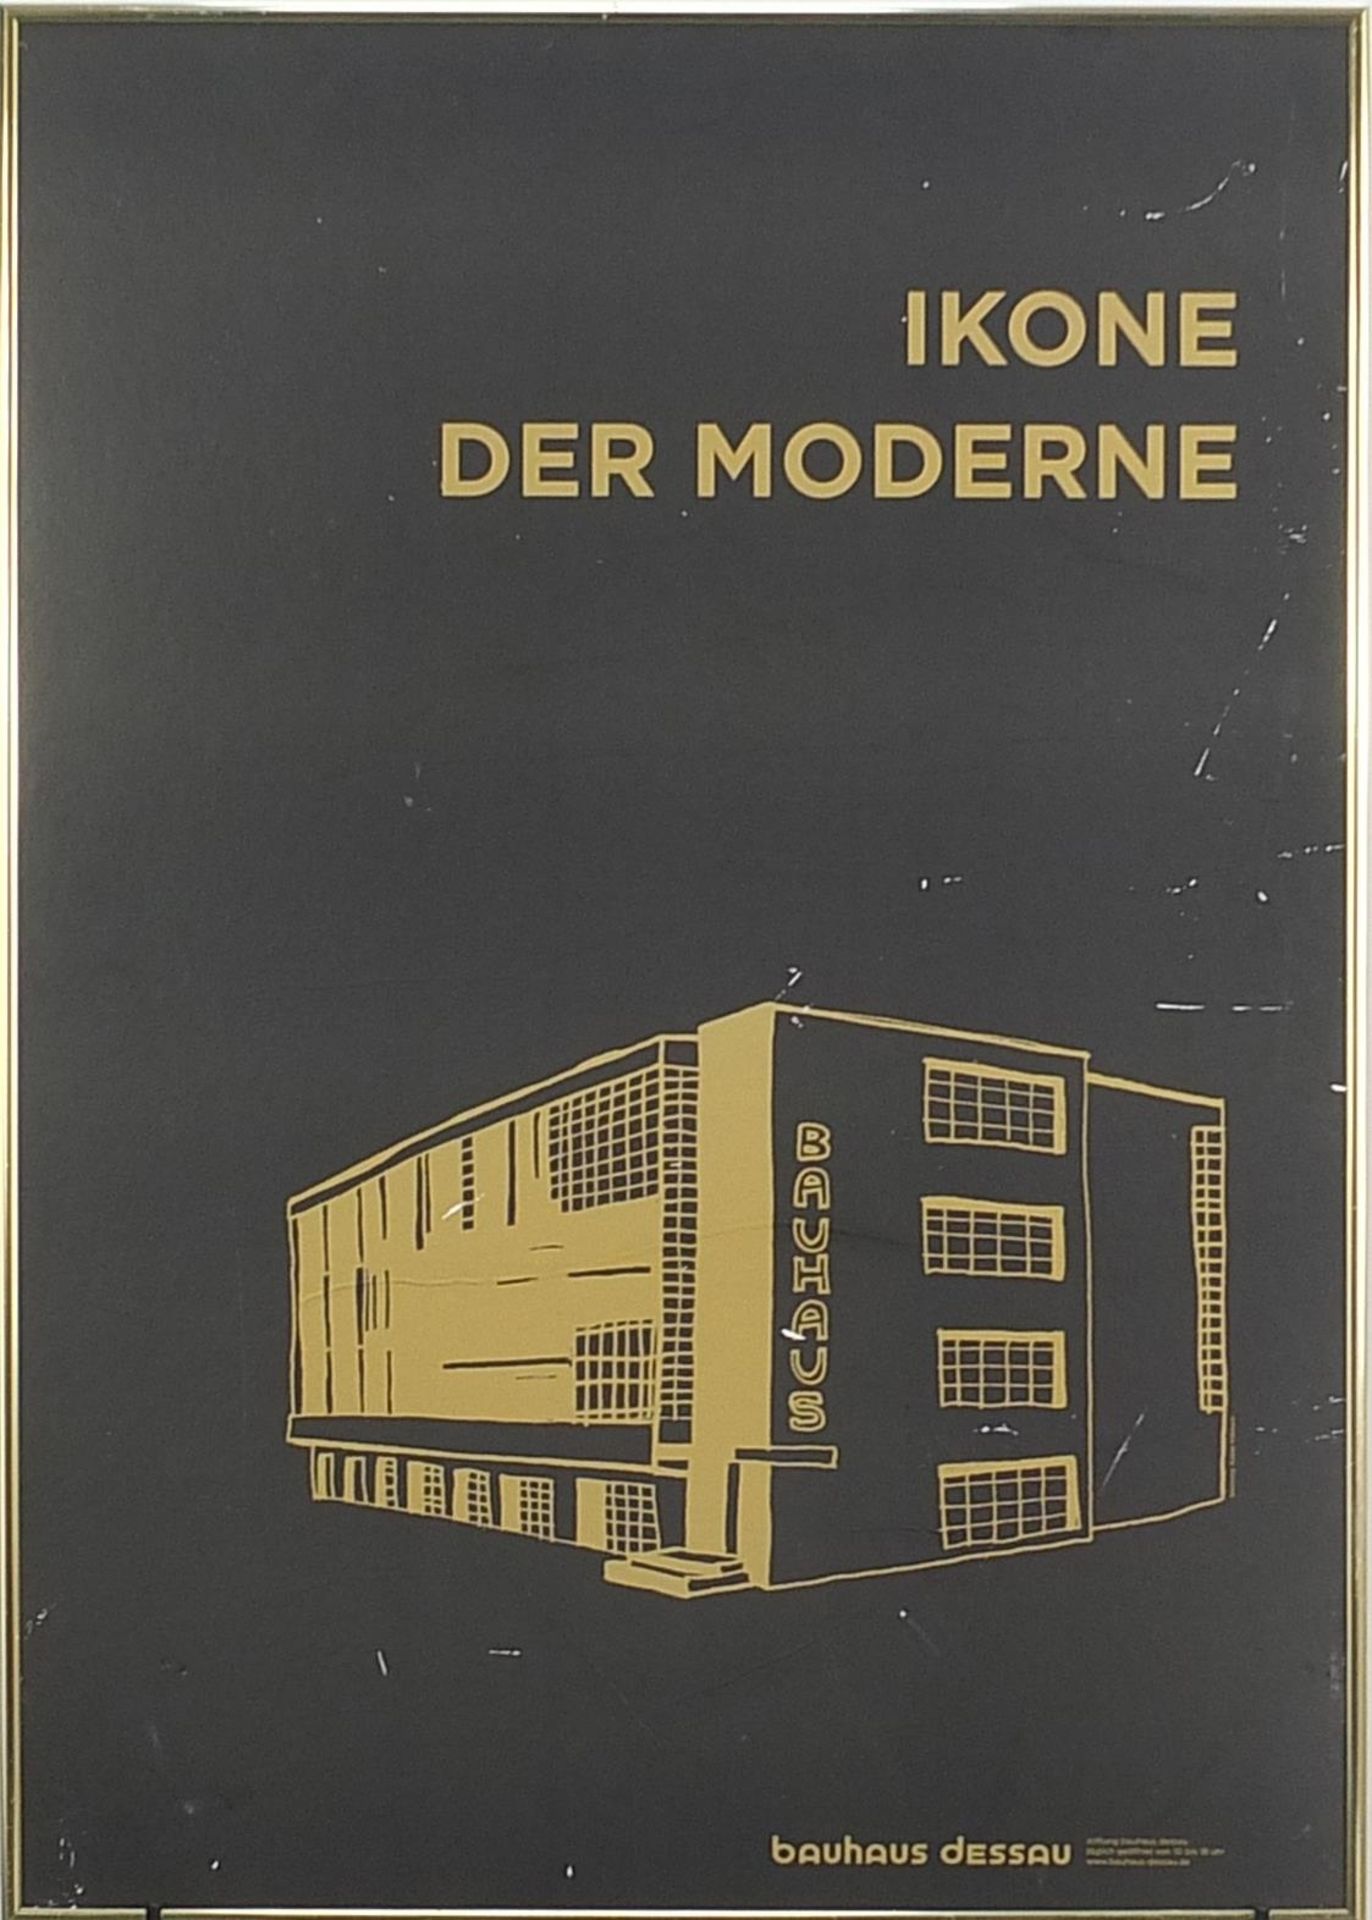 Bauhaus Dessau cardboard poster print, mounted and framed, 85cm x 60cm excluding the mount and frame